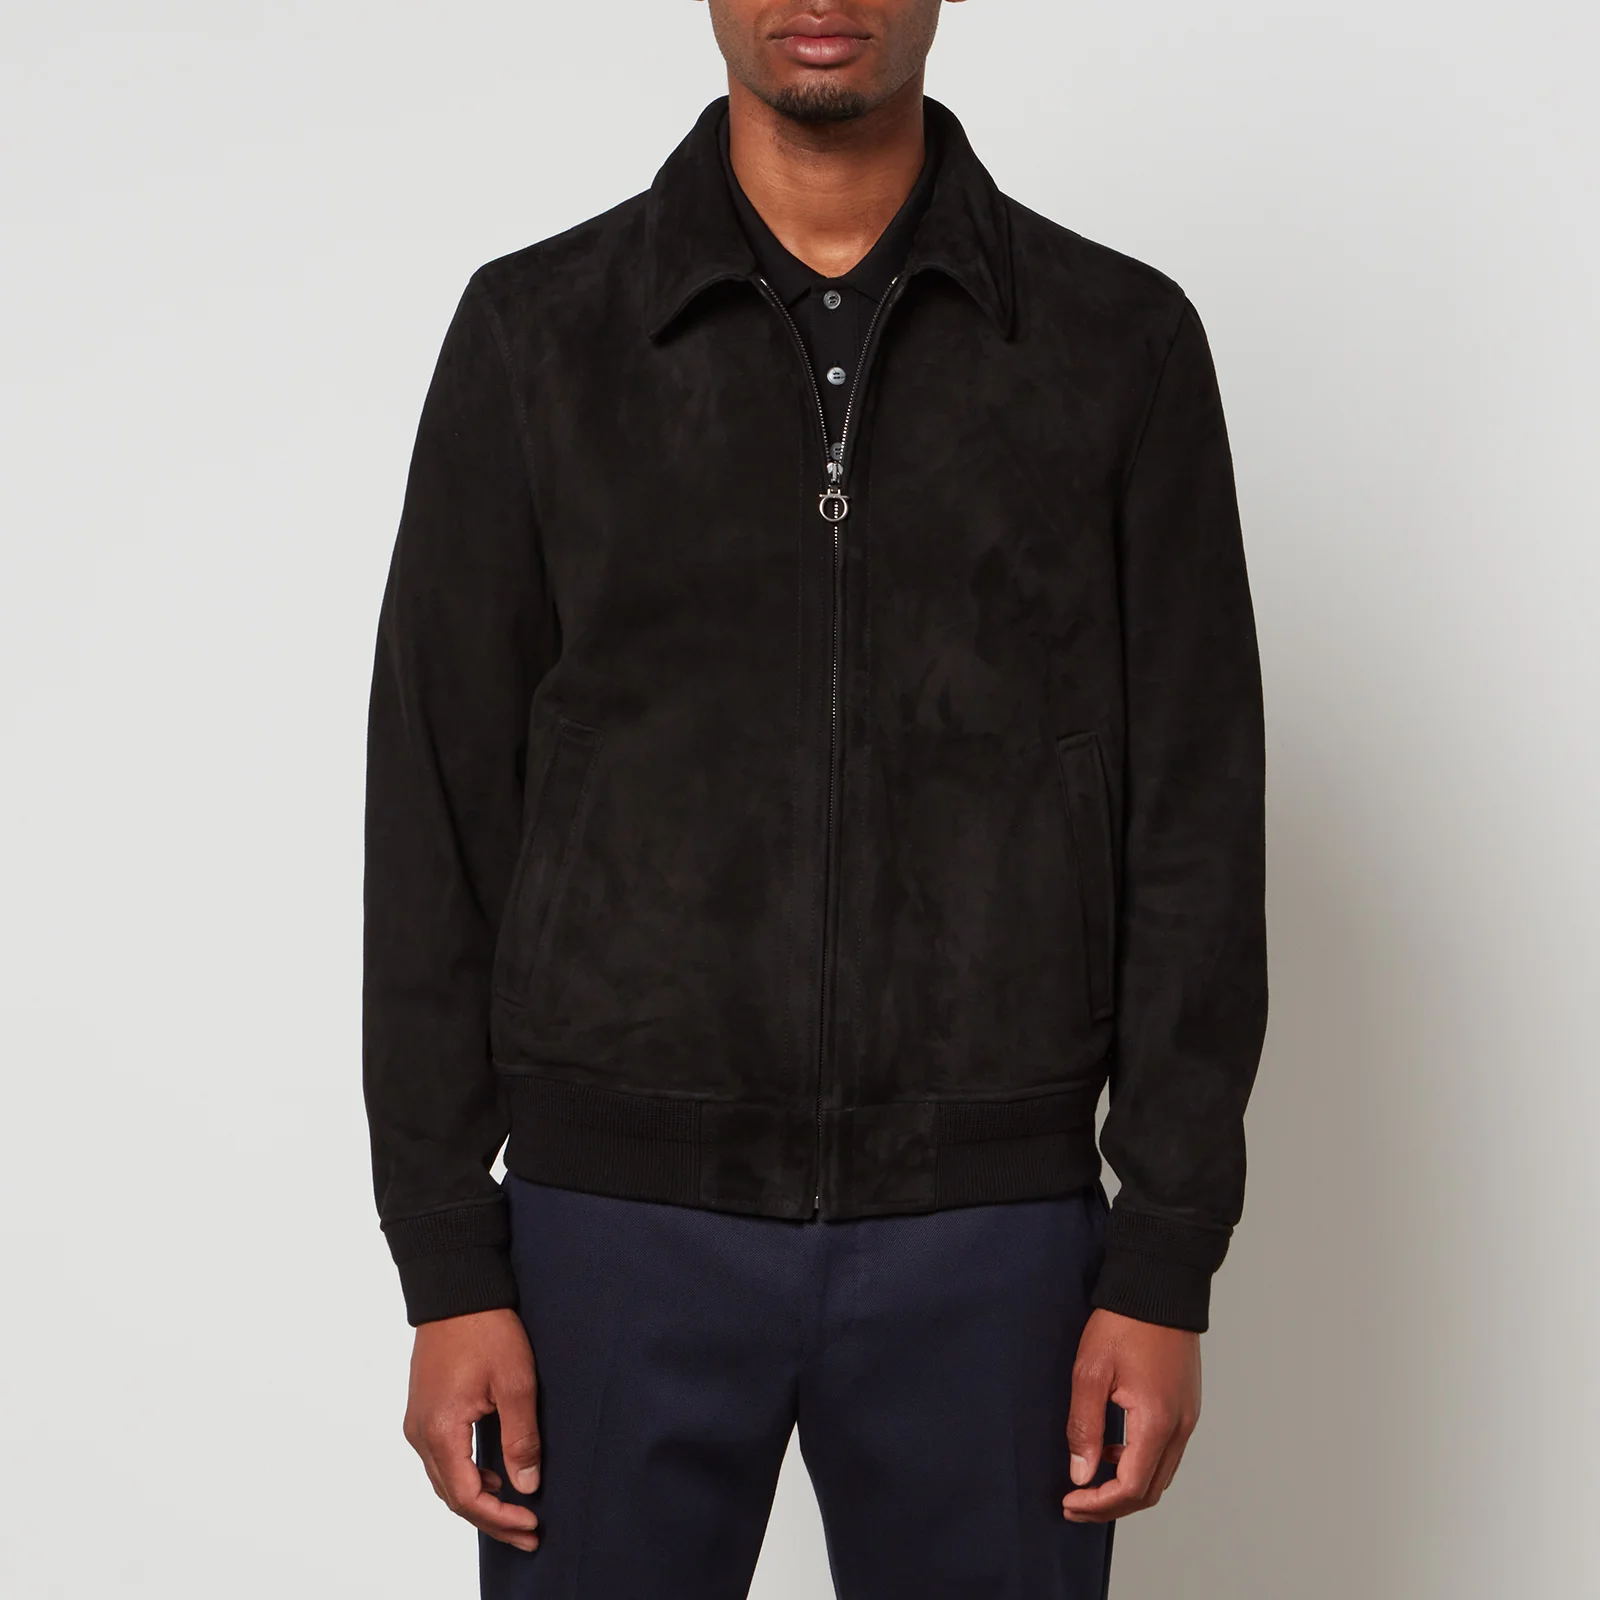 Ferragamo Men's Leather Suede Jacket - Black Image 1